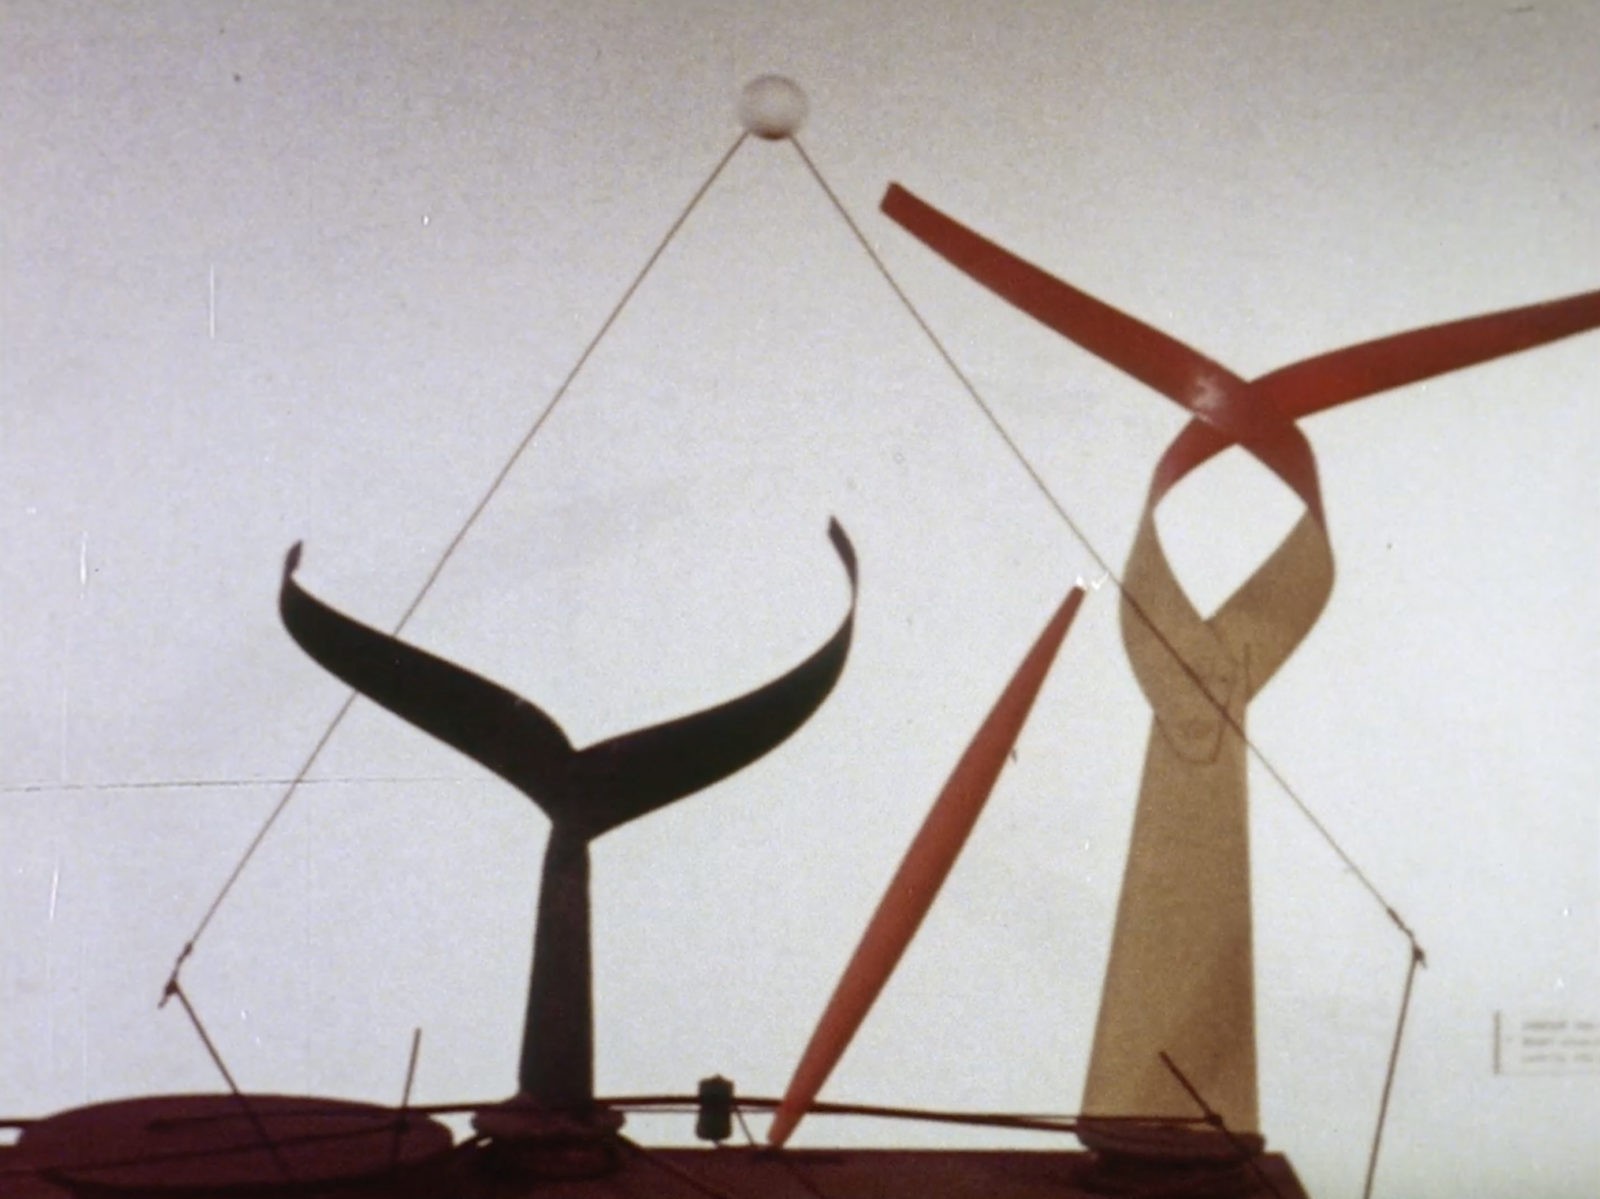 Alexander Calder: Sculpture and Constructions